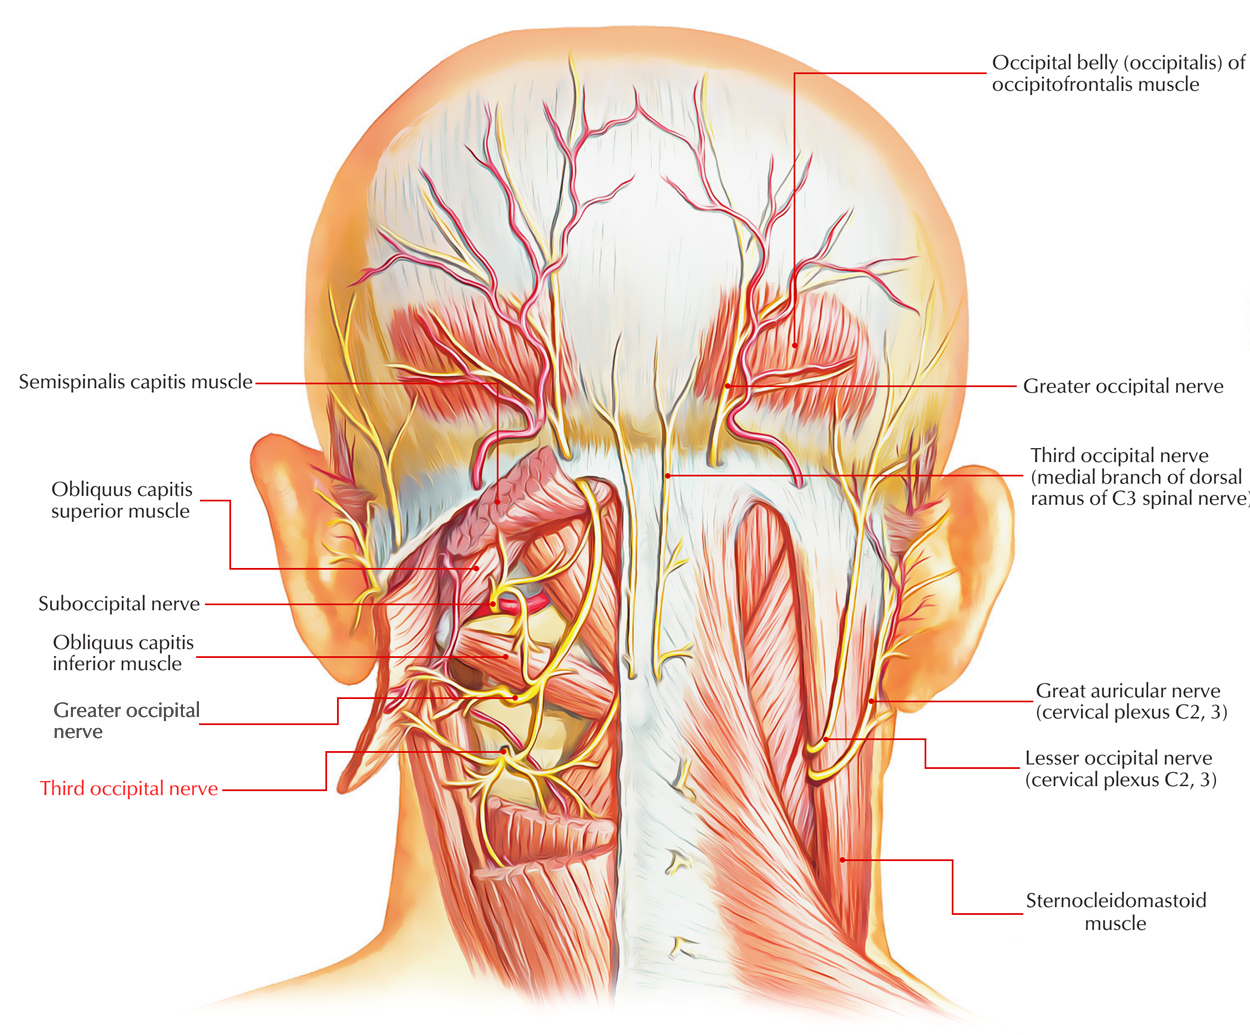 Third Occipital Nerve